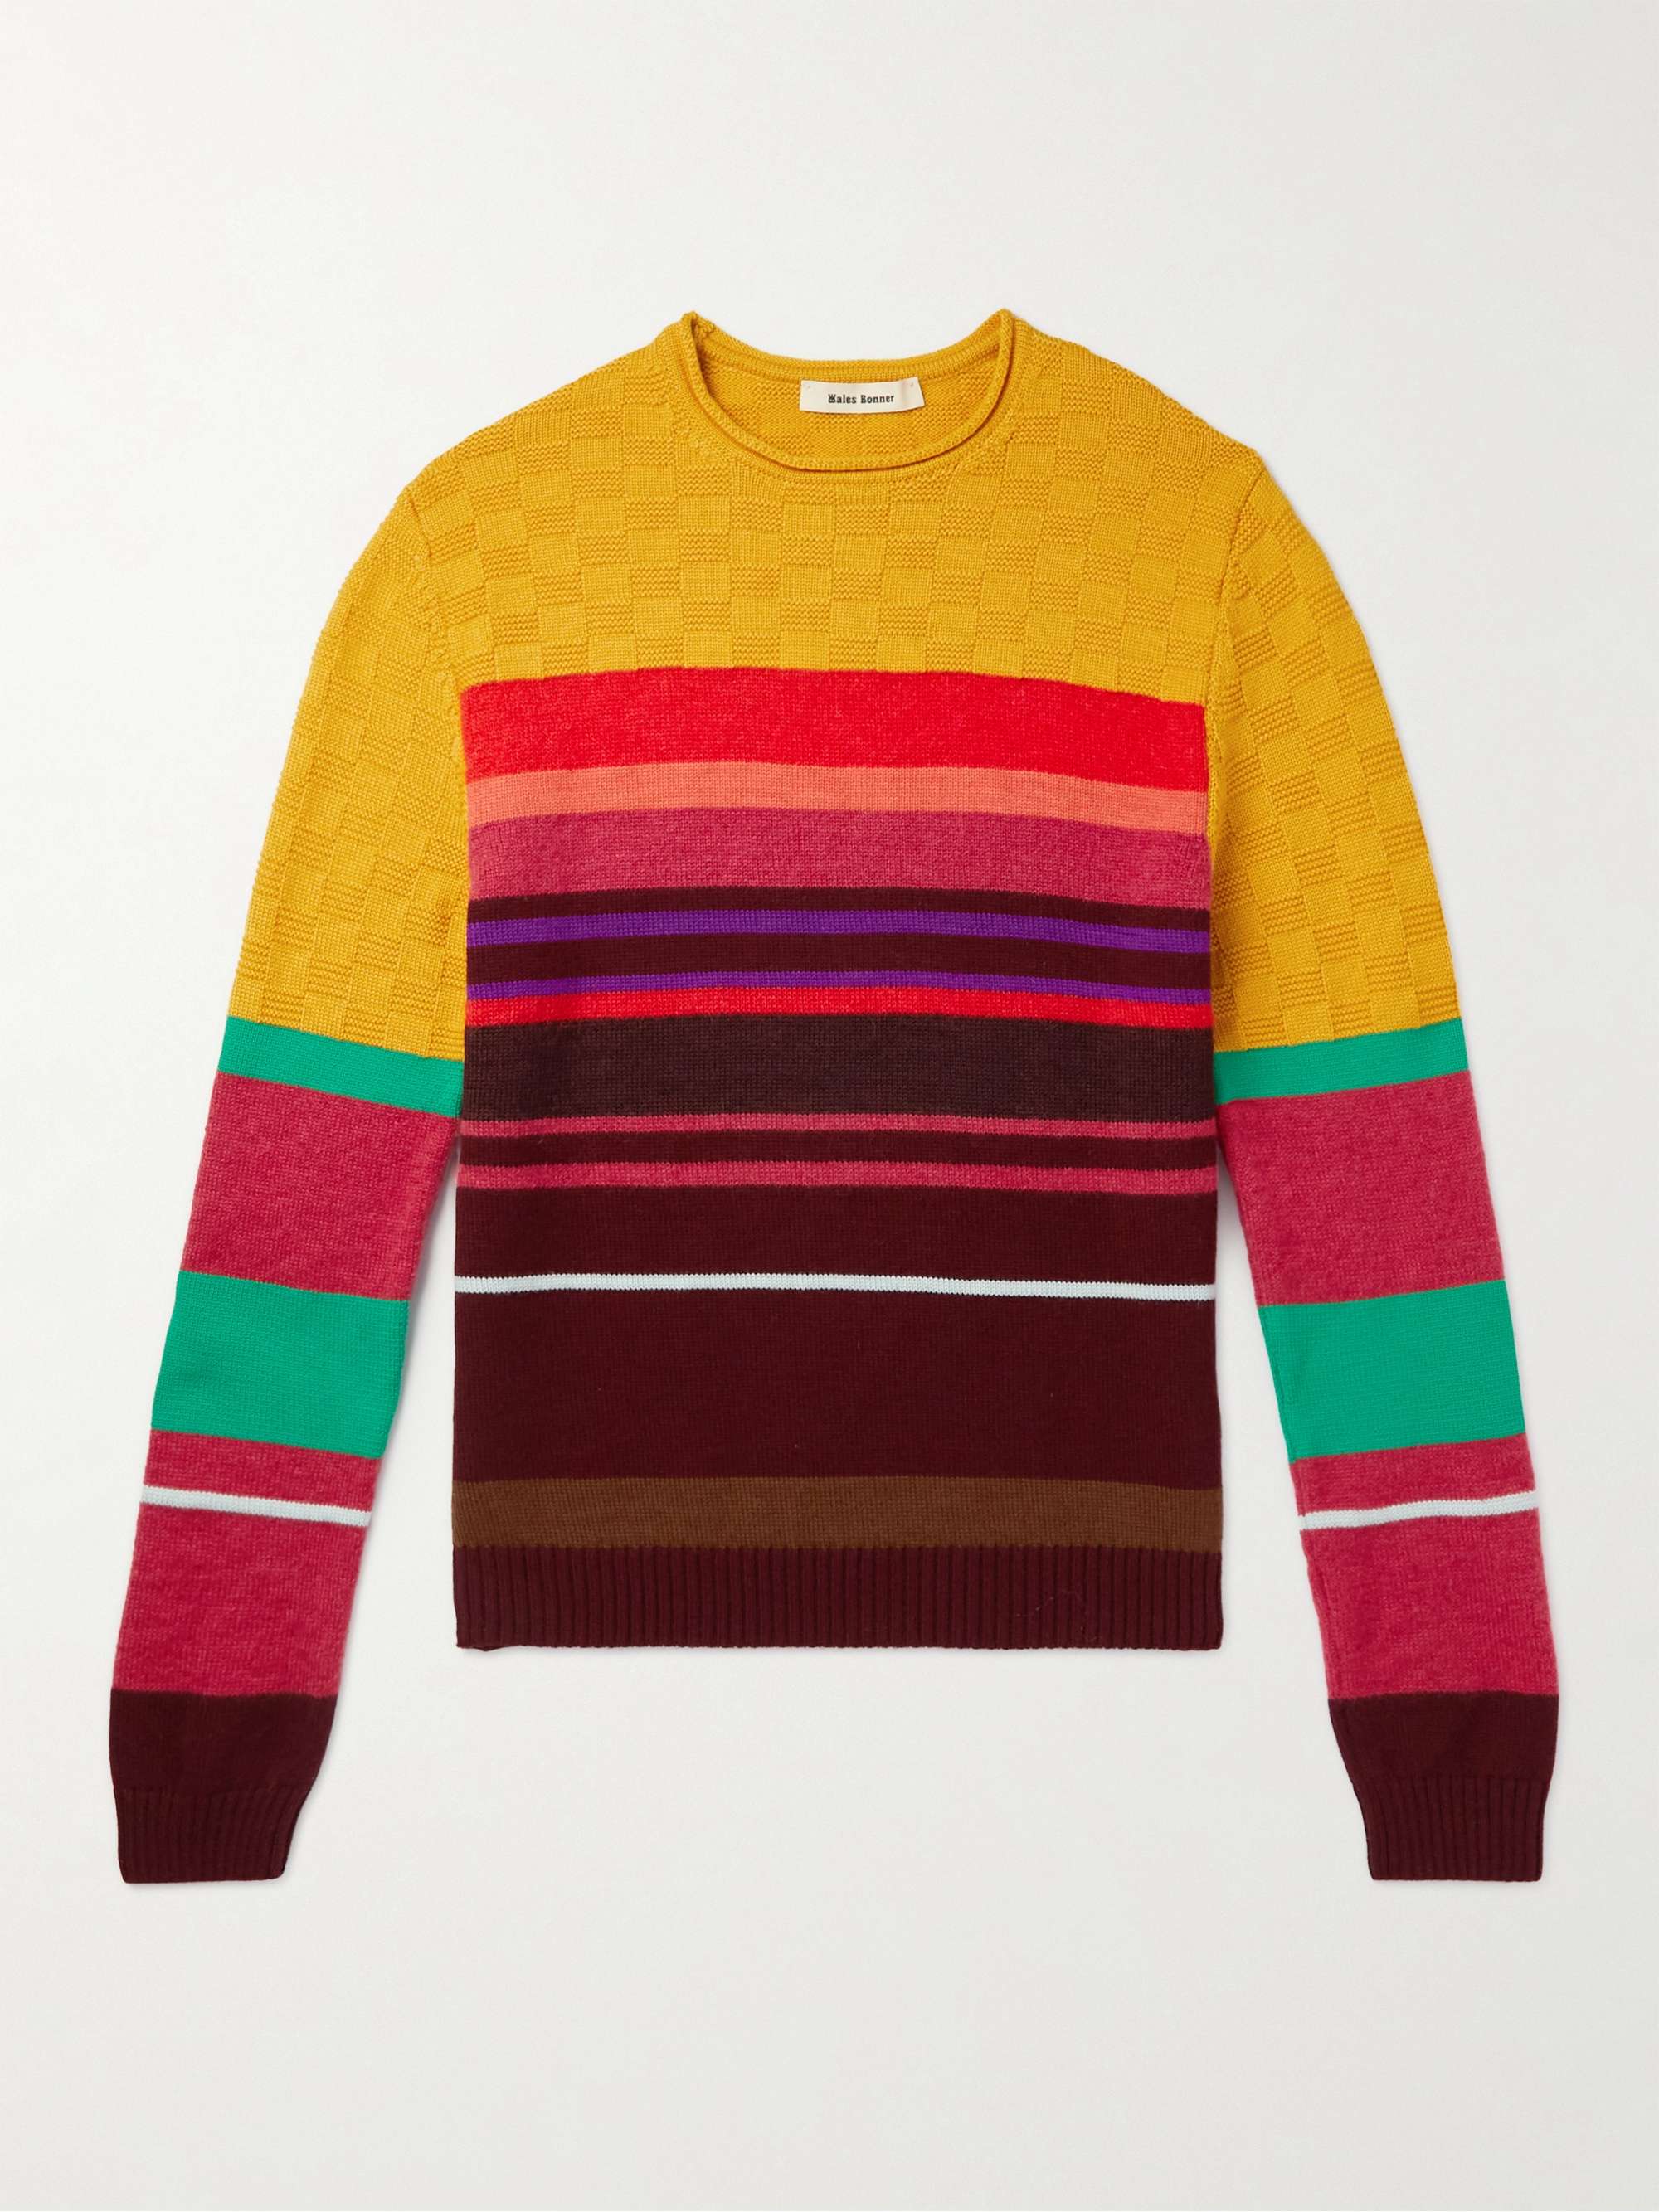 WALES BONNER Crescendo Slim-Fit Striped Merino Wool-Blend Sweater